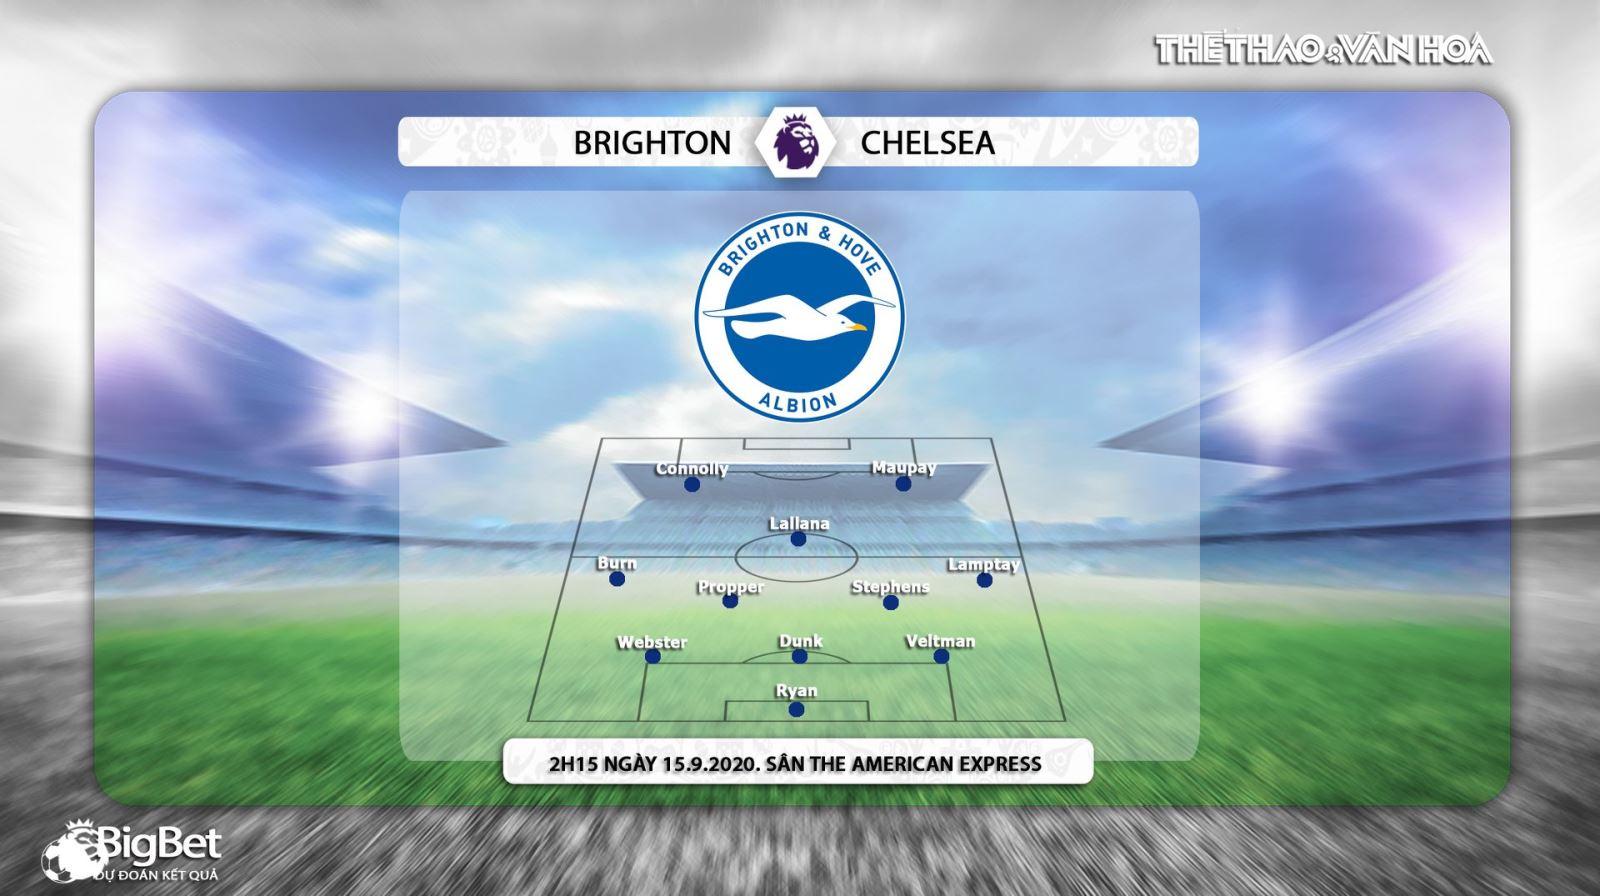 Brighton vs Chelsea, Chelsea, Brighton, nhận định bóng đá Brighton vs Chelsea, nhận định Brighton vs Chelsea, bóng đá, bong da, kèo bóng đá